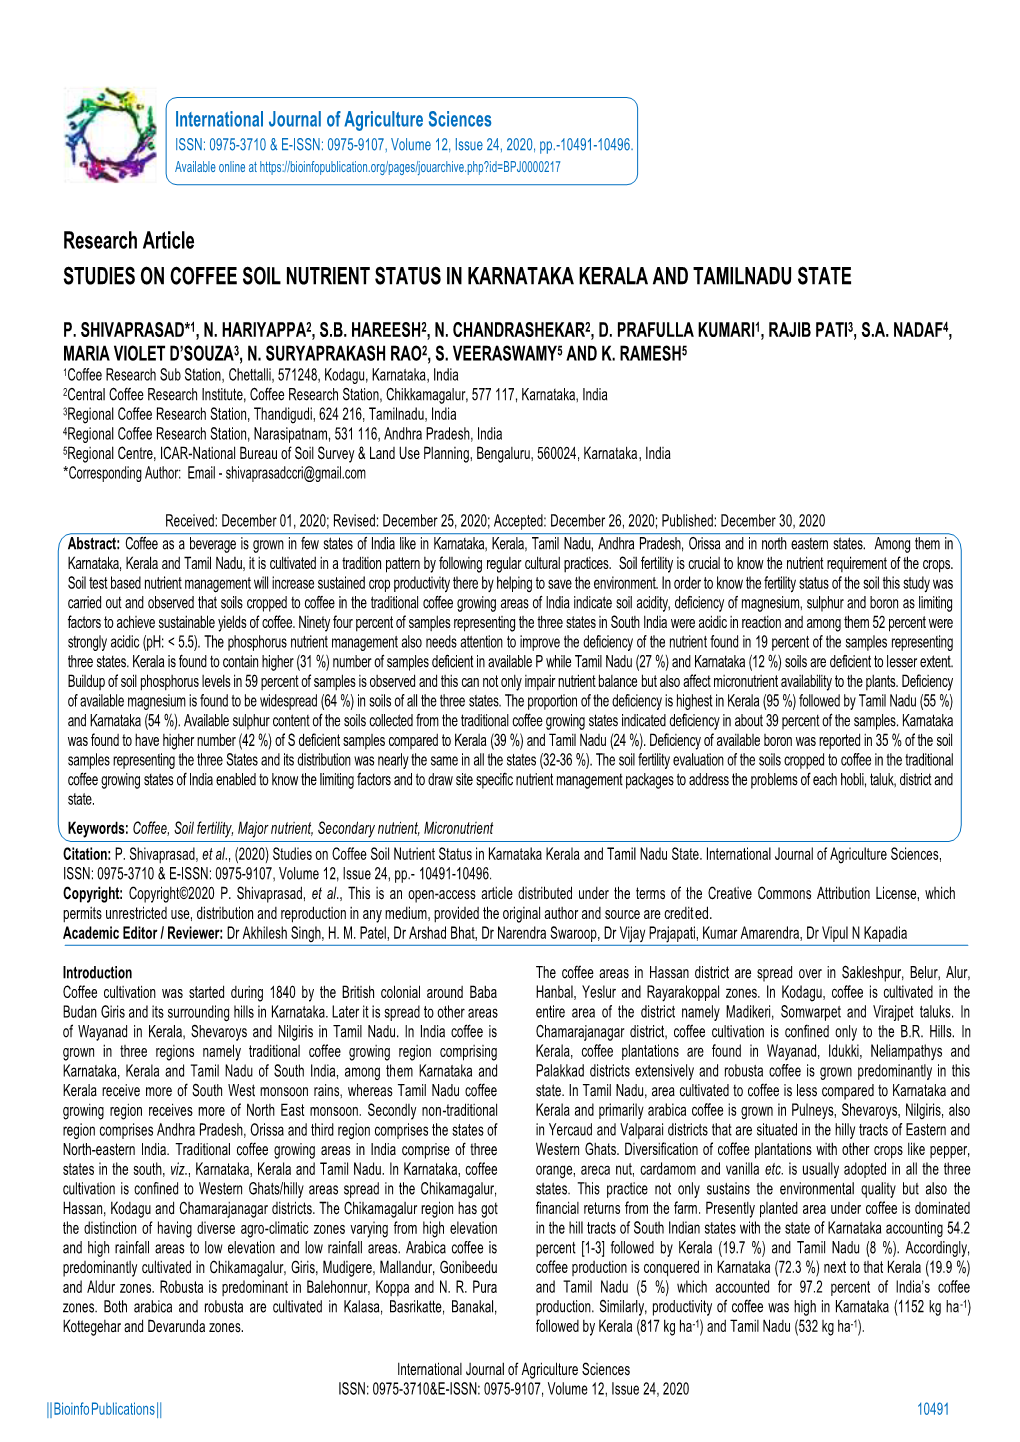 Research Article STUDIES on COFFEE SOIL NUTRIENT STATUS in KARNATAKA KERALA and TAMILNADU STATE